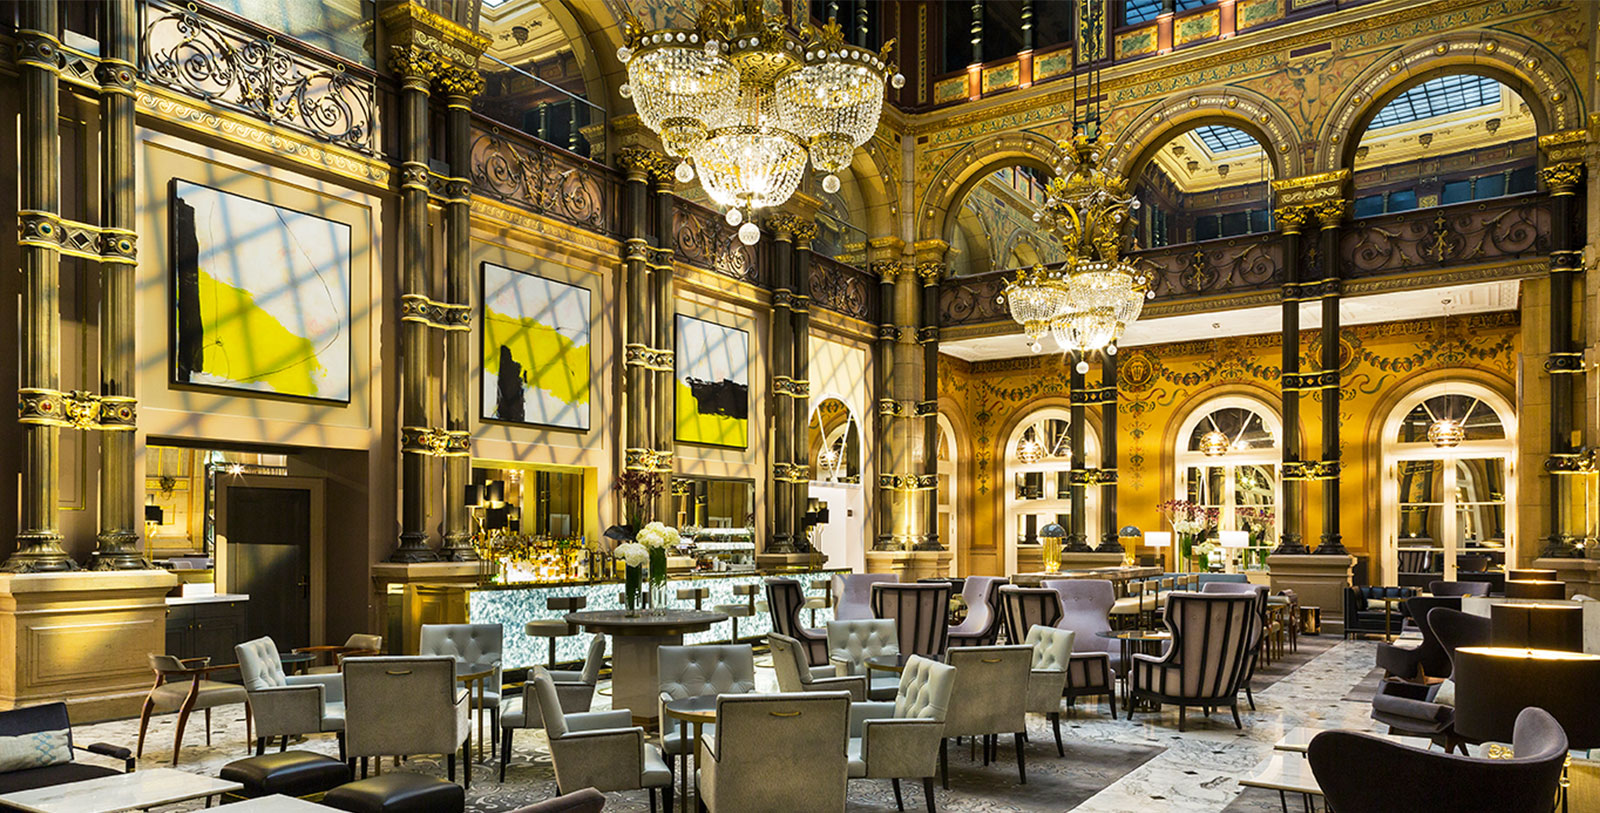 Image of Le Grand Salon, Hilton Paris Opera, France, 1889, Member of Historic Hotels Worldwide, Dining